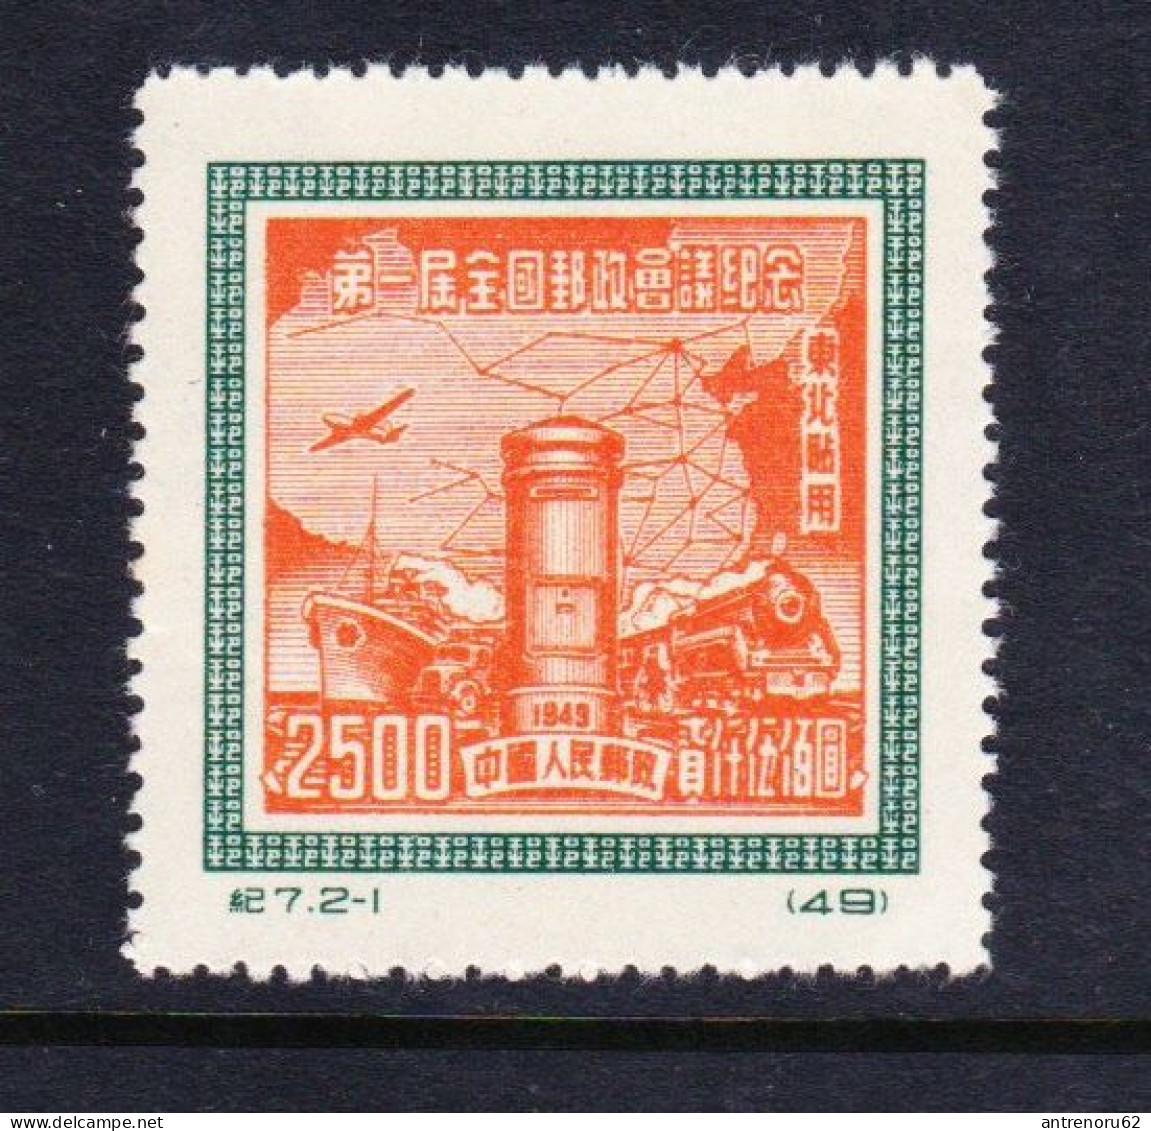 STAMPS-1950-CHINA-UNUSED-SEE-SCAN - Unused Stamps